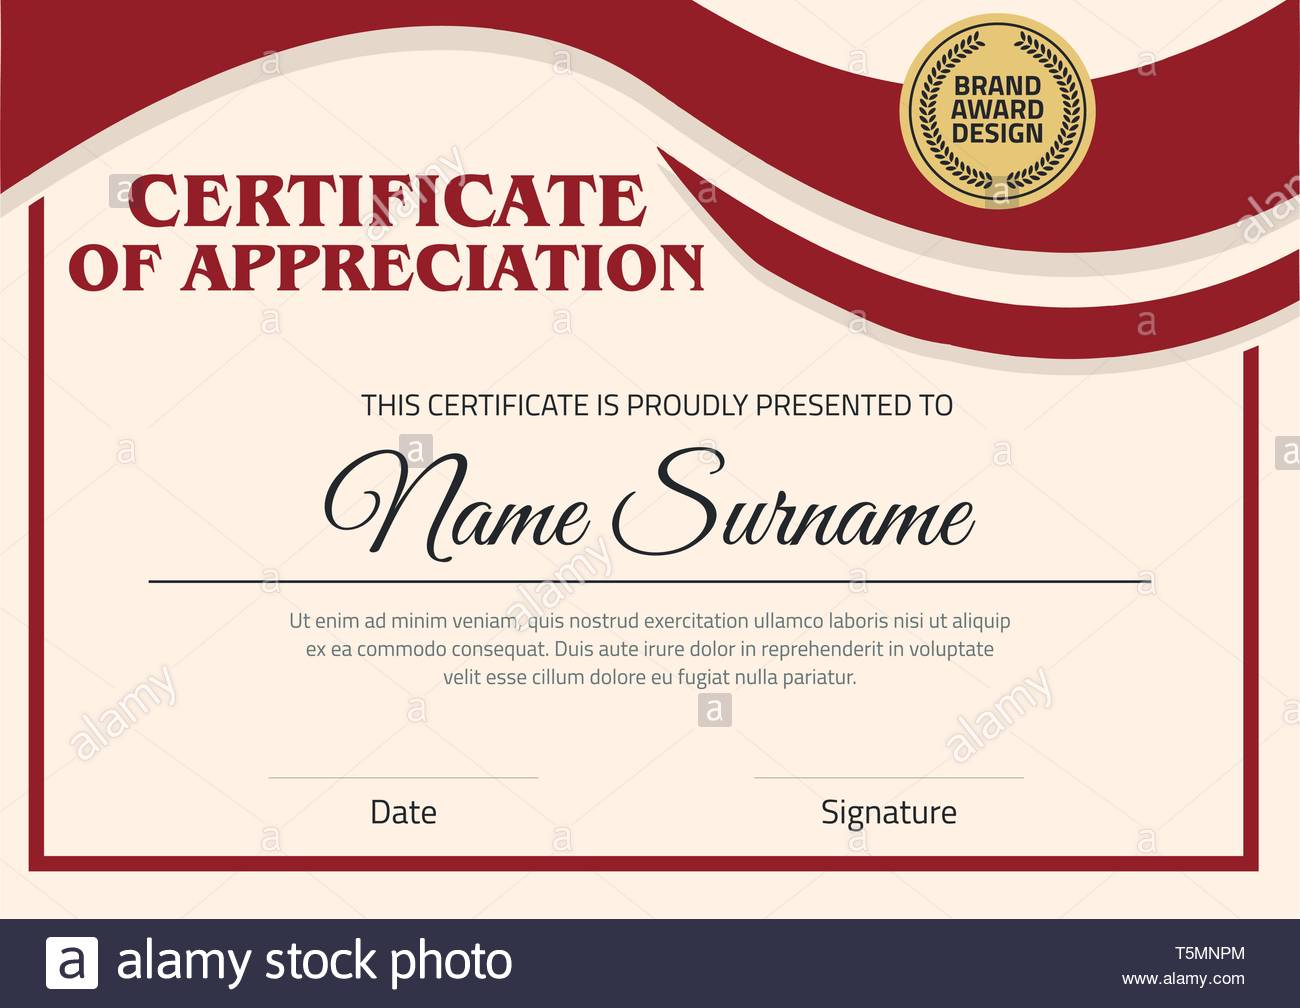 Vector Certificate Template. Illustration Certificate In A4 Pertaining To Certificate Template Size